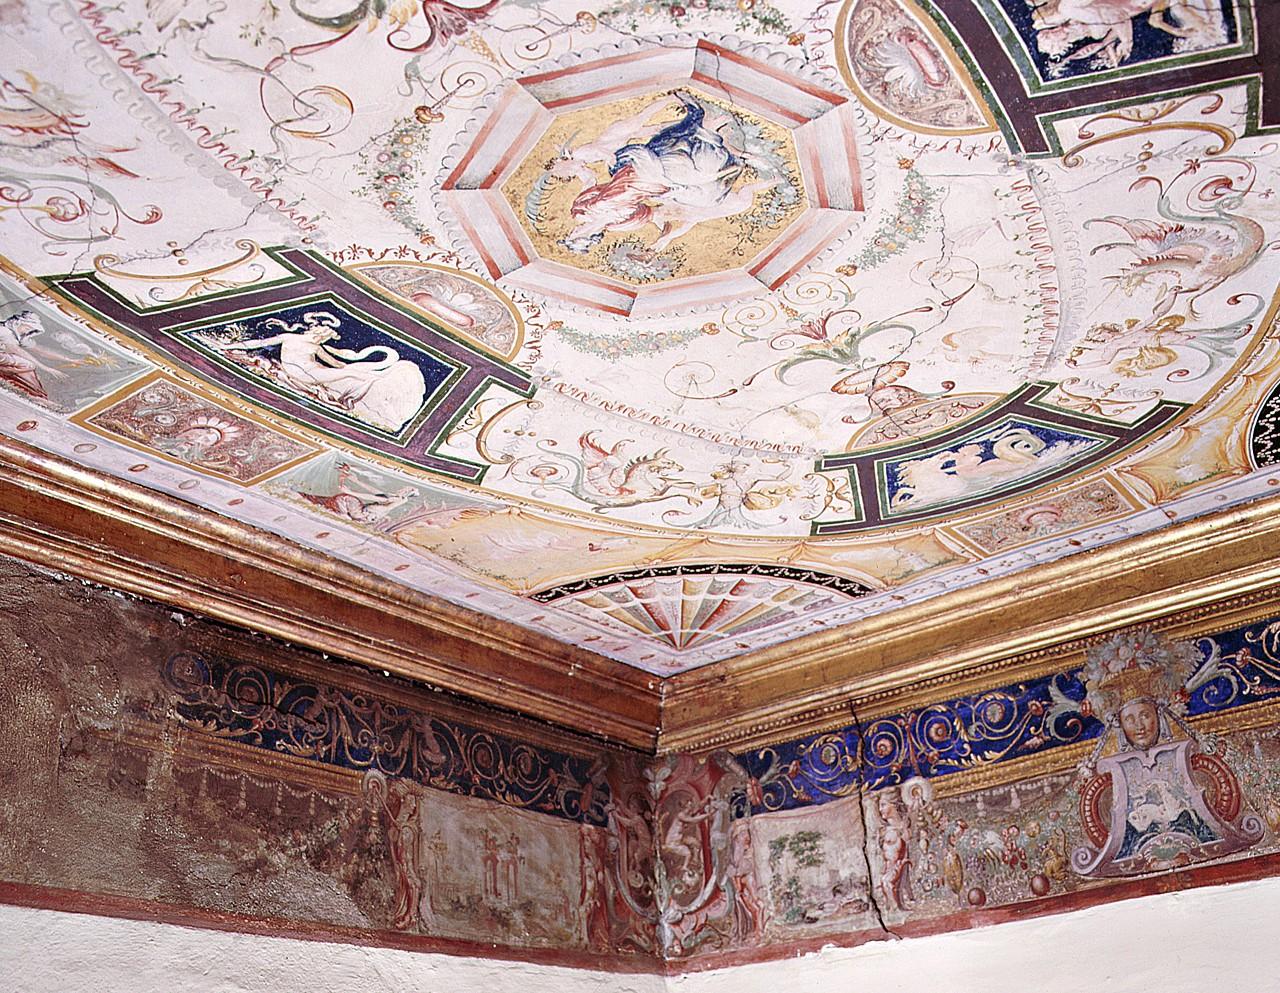 motivi decorativi a grottesche (dipinto, ciclo) di Salviati Francesco (sec. XVI)